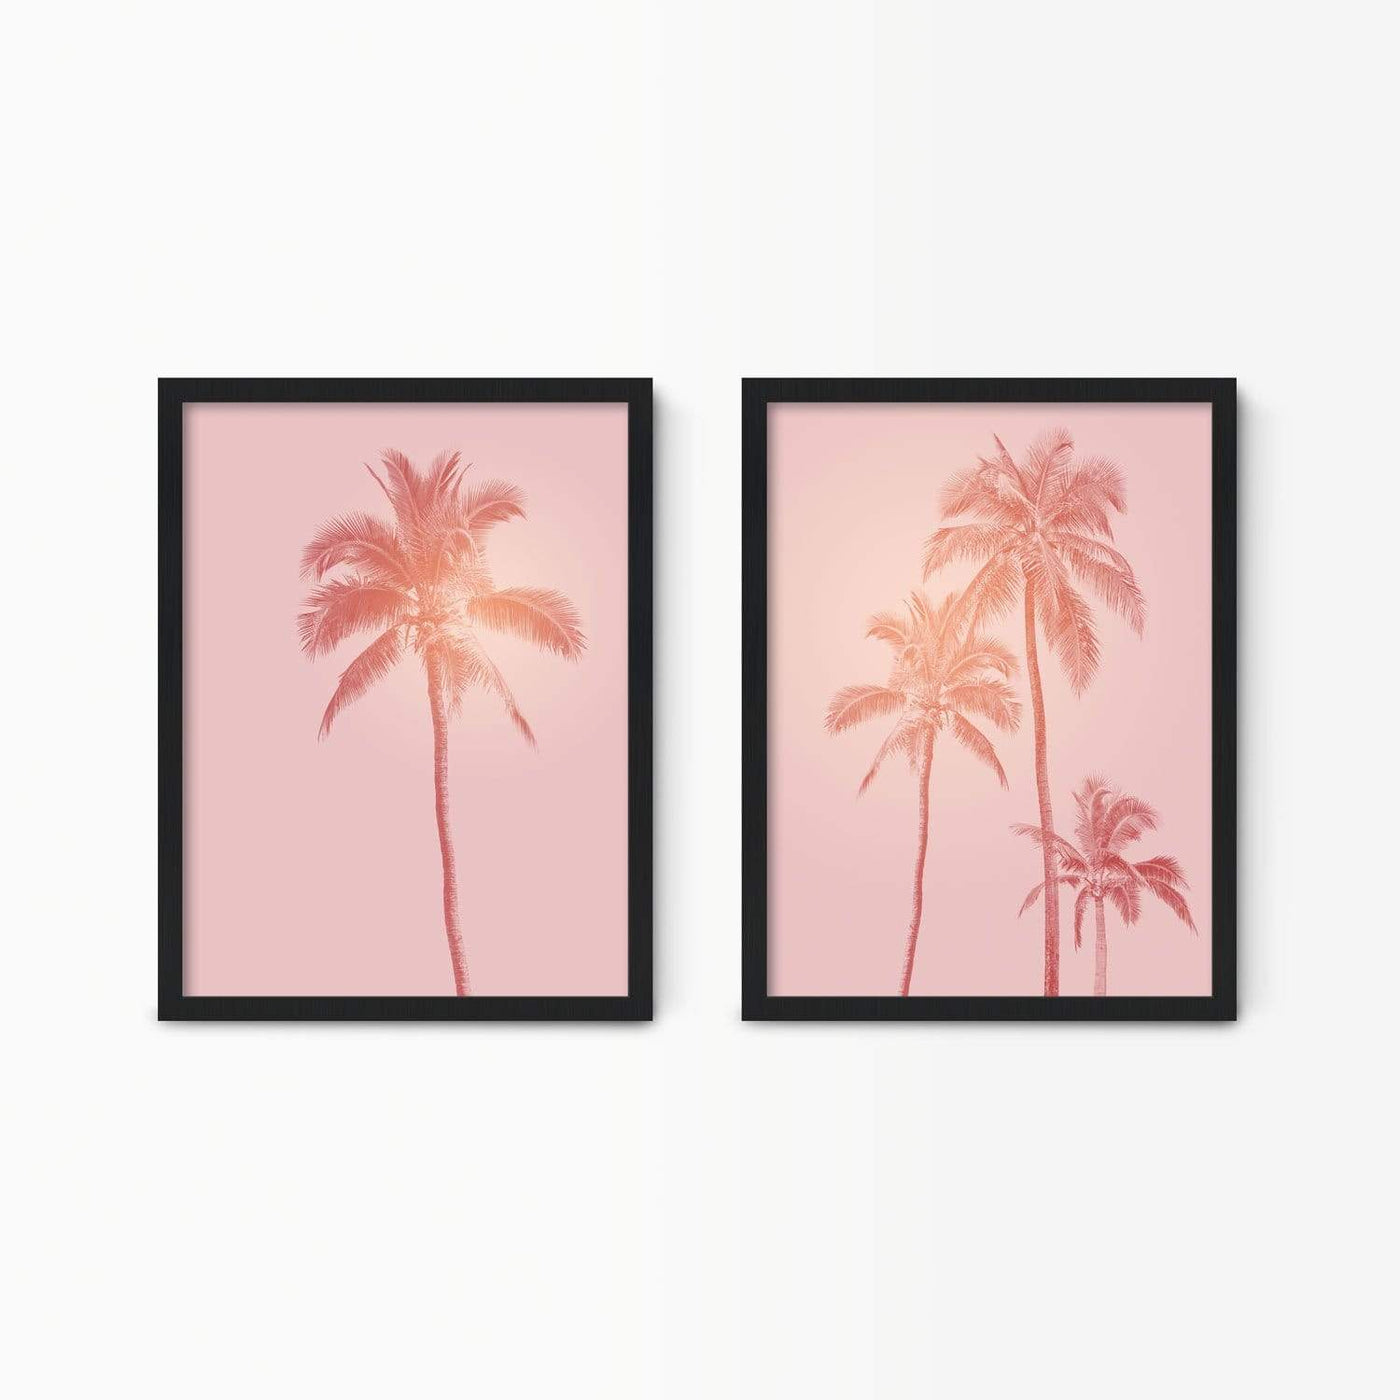 Green Lili 30x40cm (12x16") / Black Frame Pink Palm Trees Wall Art Set